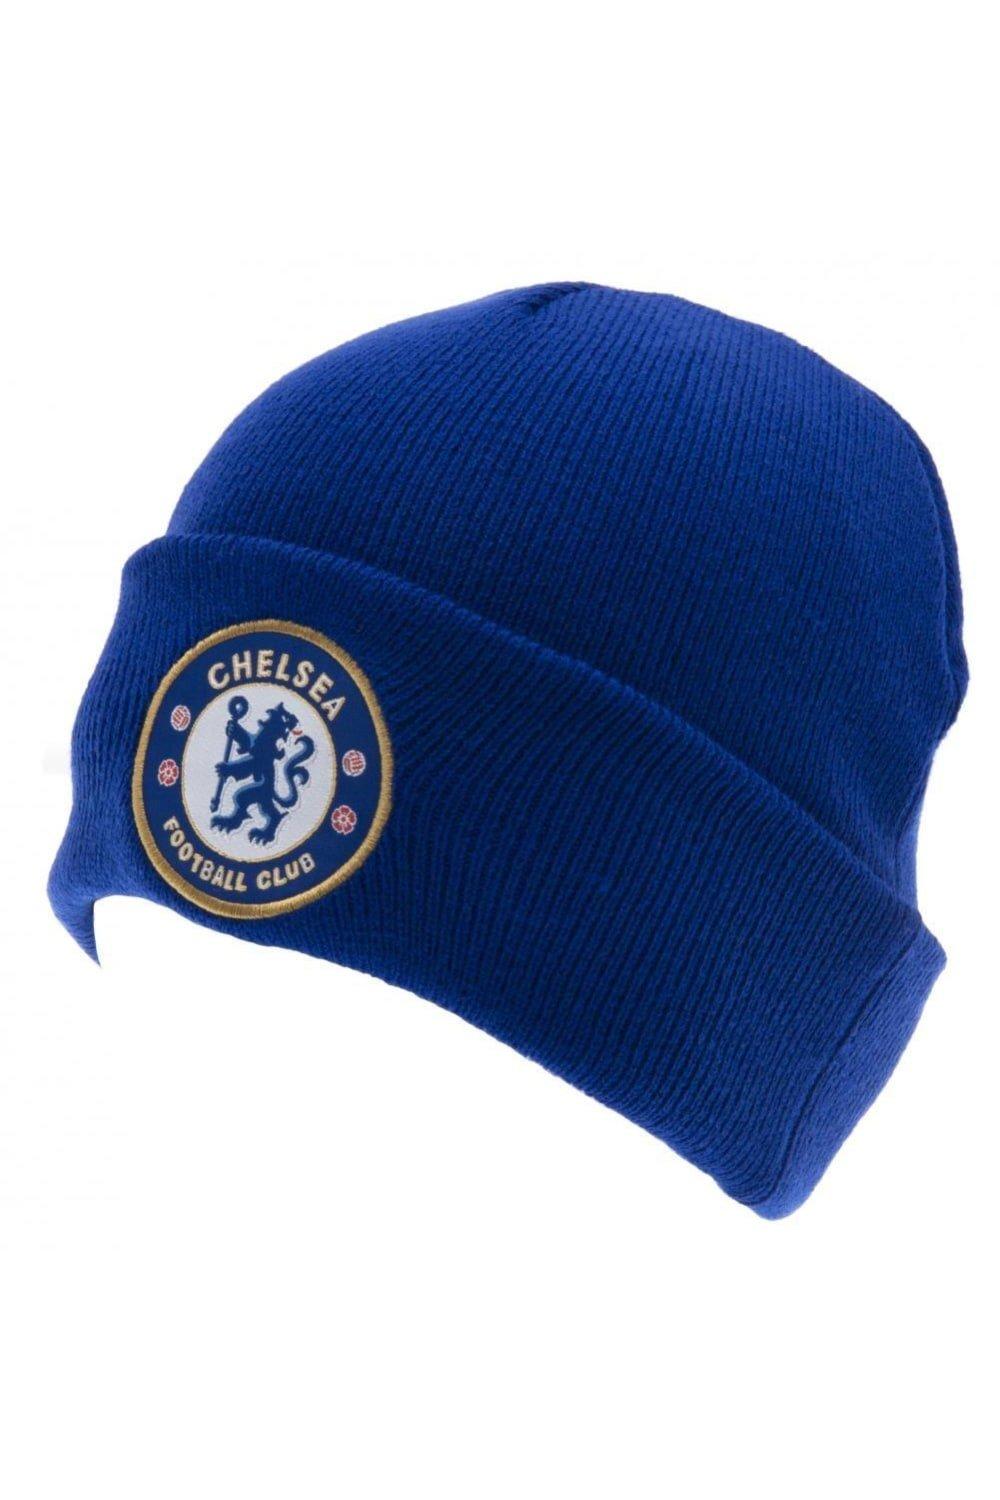 Официальная вязаная шапка с отворотом Chelsea FC, синий шапка nike chelsea fc